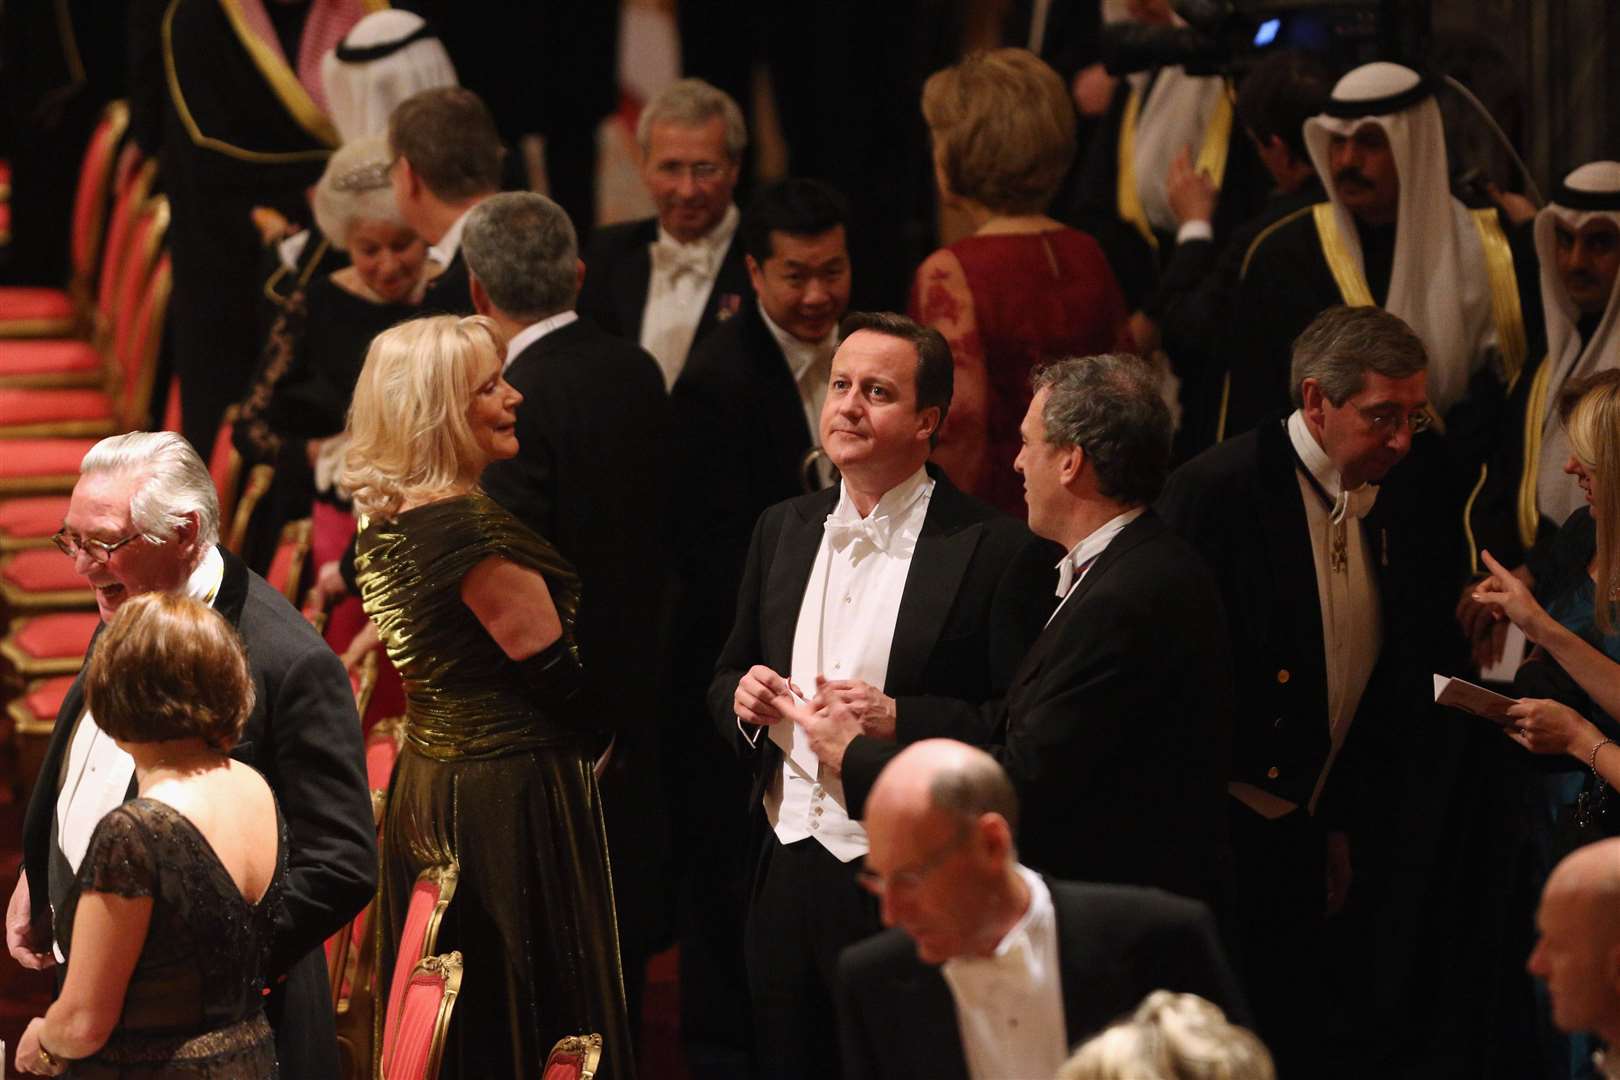 The then-prime minister David Cameron at the state banquet for the Amir Sheikh Sabah Al-Ahmad Al-Jaber Al-Sabah of Kuwait in Windsor Castle in 2012 (PA)